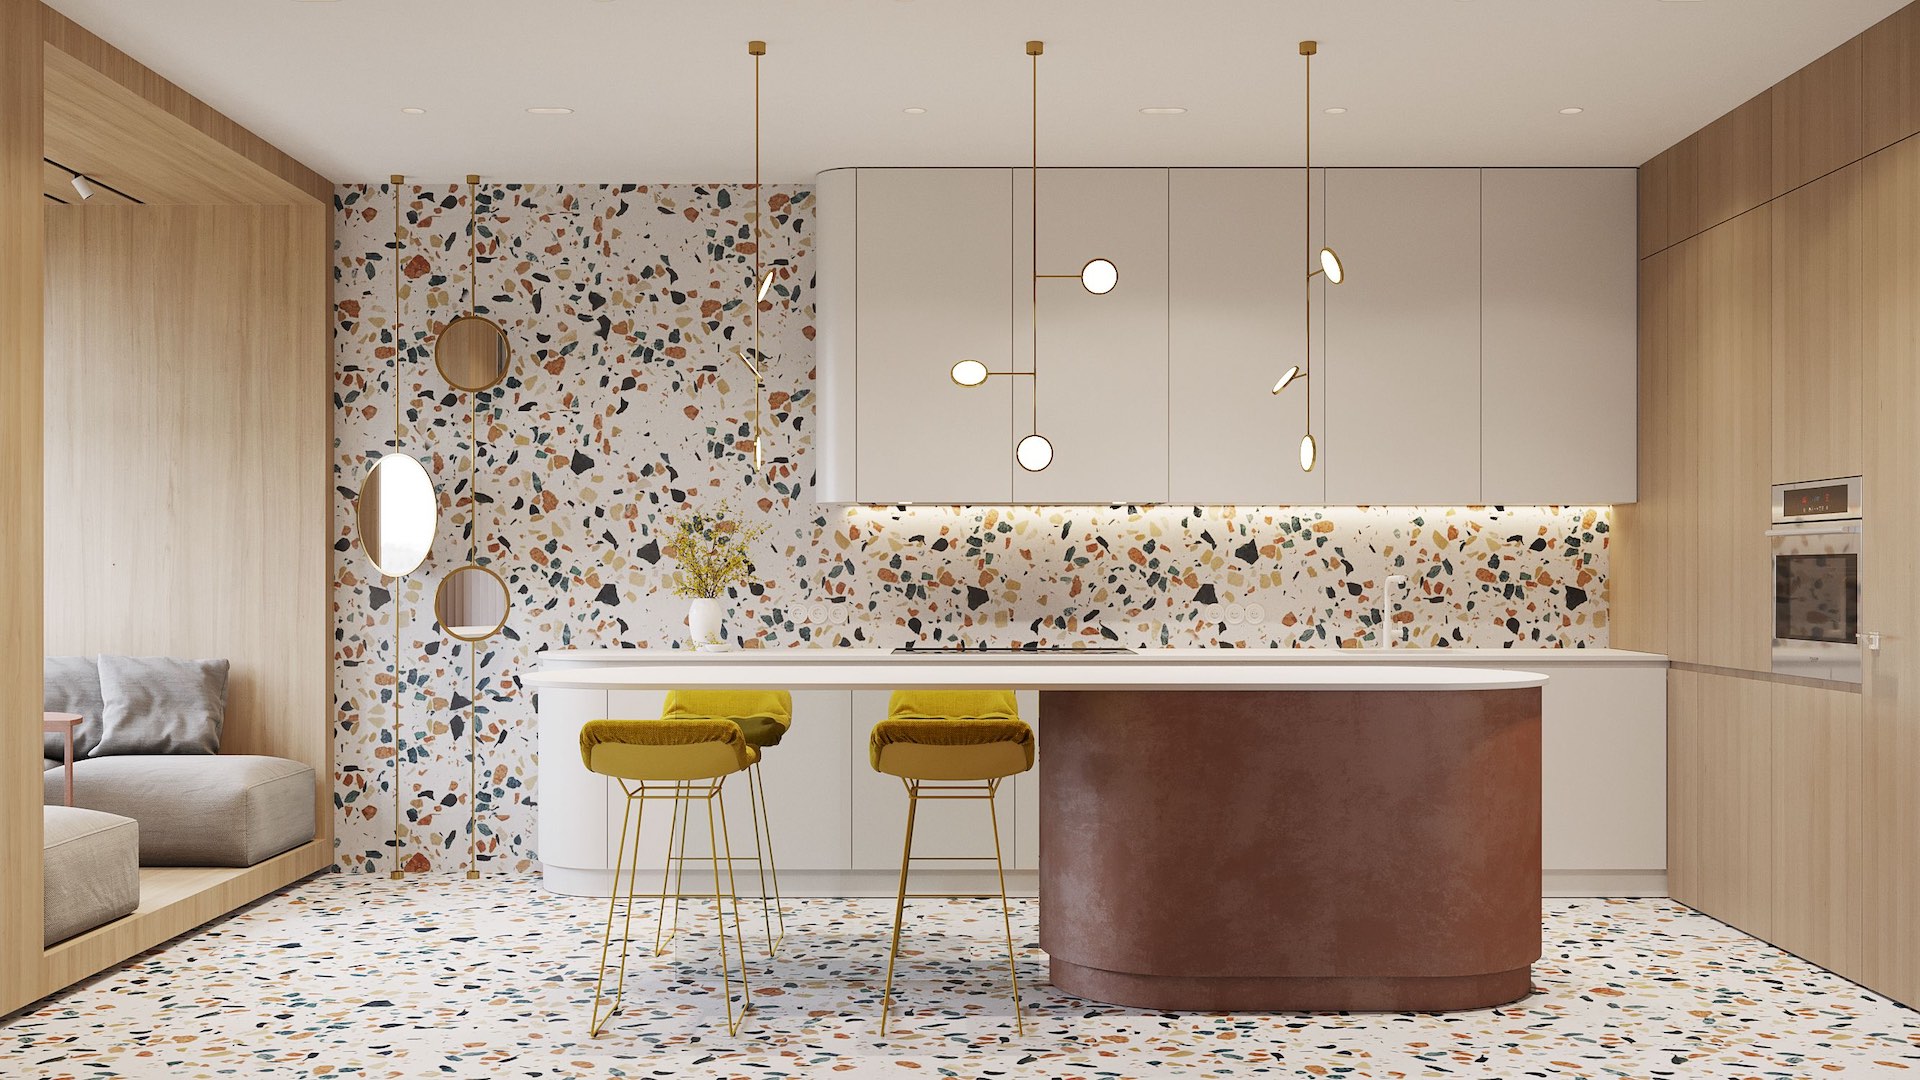 Multi-colored Terrazzo tiles draws memories of 70s Retro trends among modern furniture